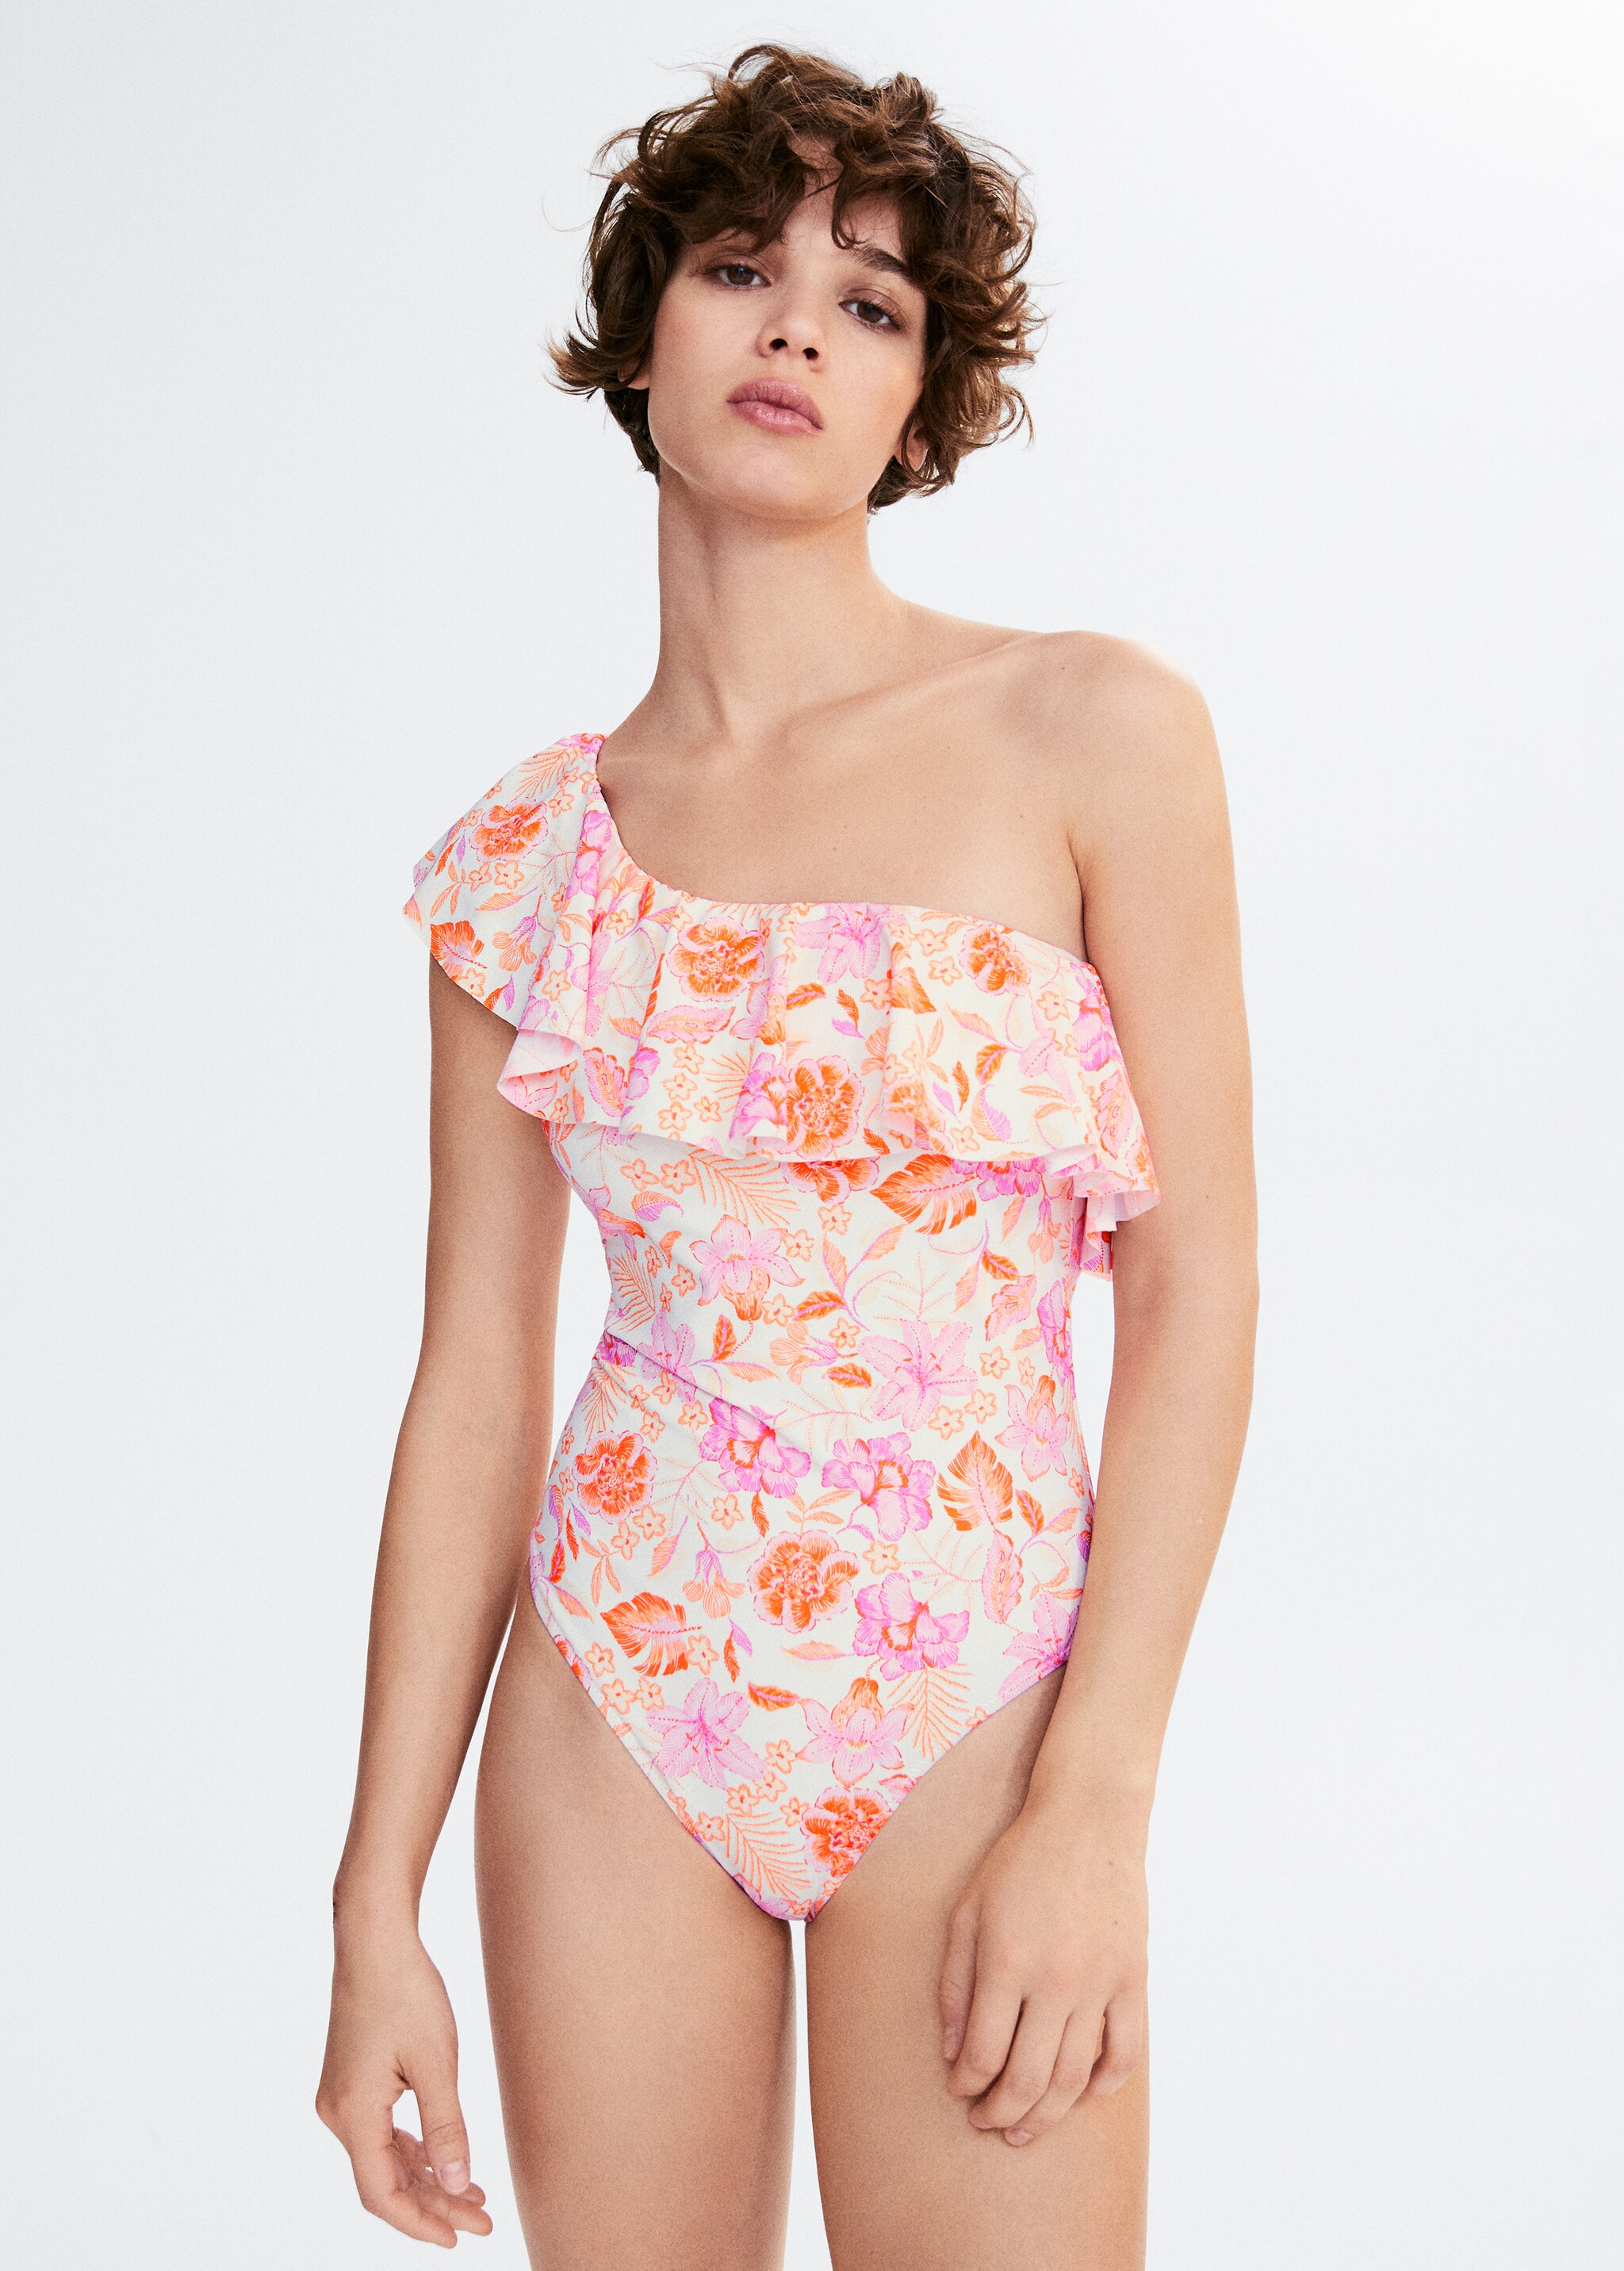 Ruffled floral print swimsuit - Medium plane